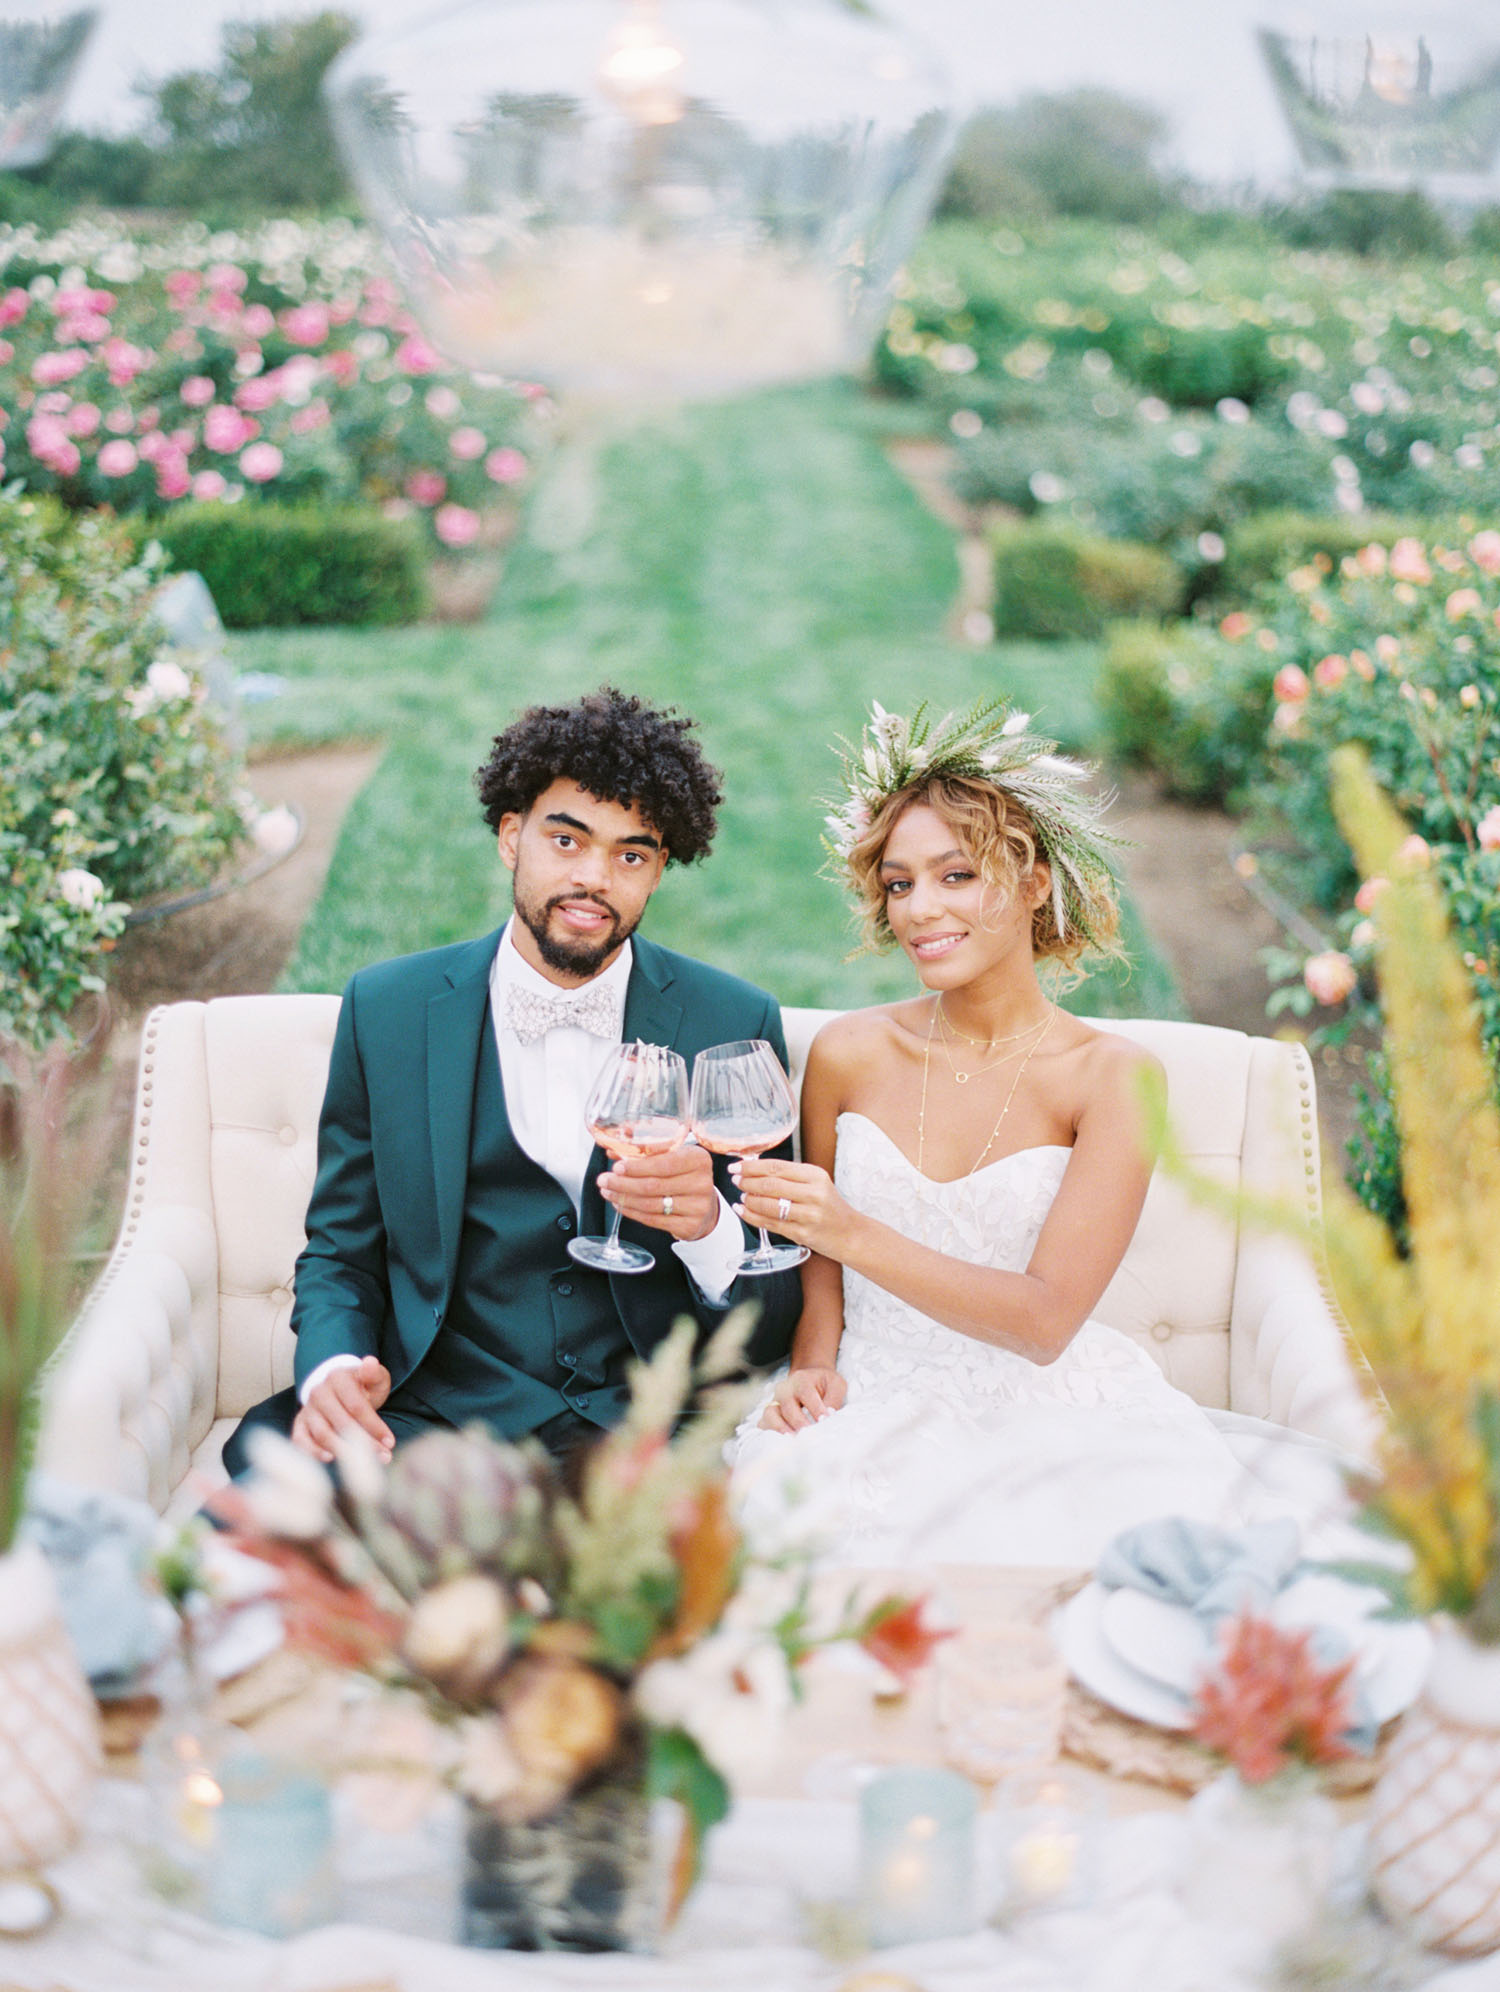 Intimate Greenhouse Garden Wedding Inspiration